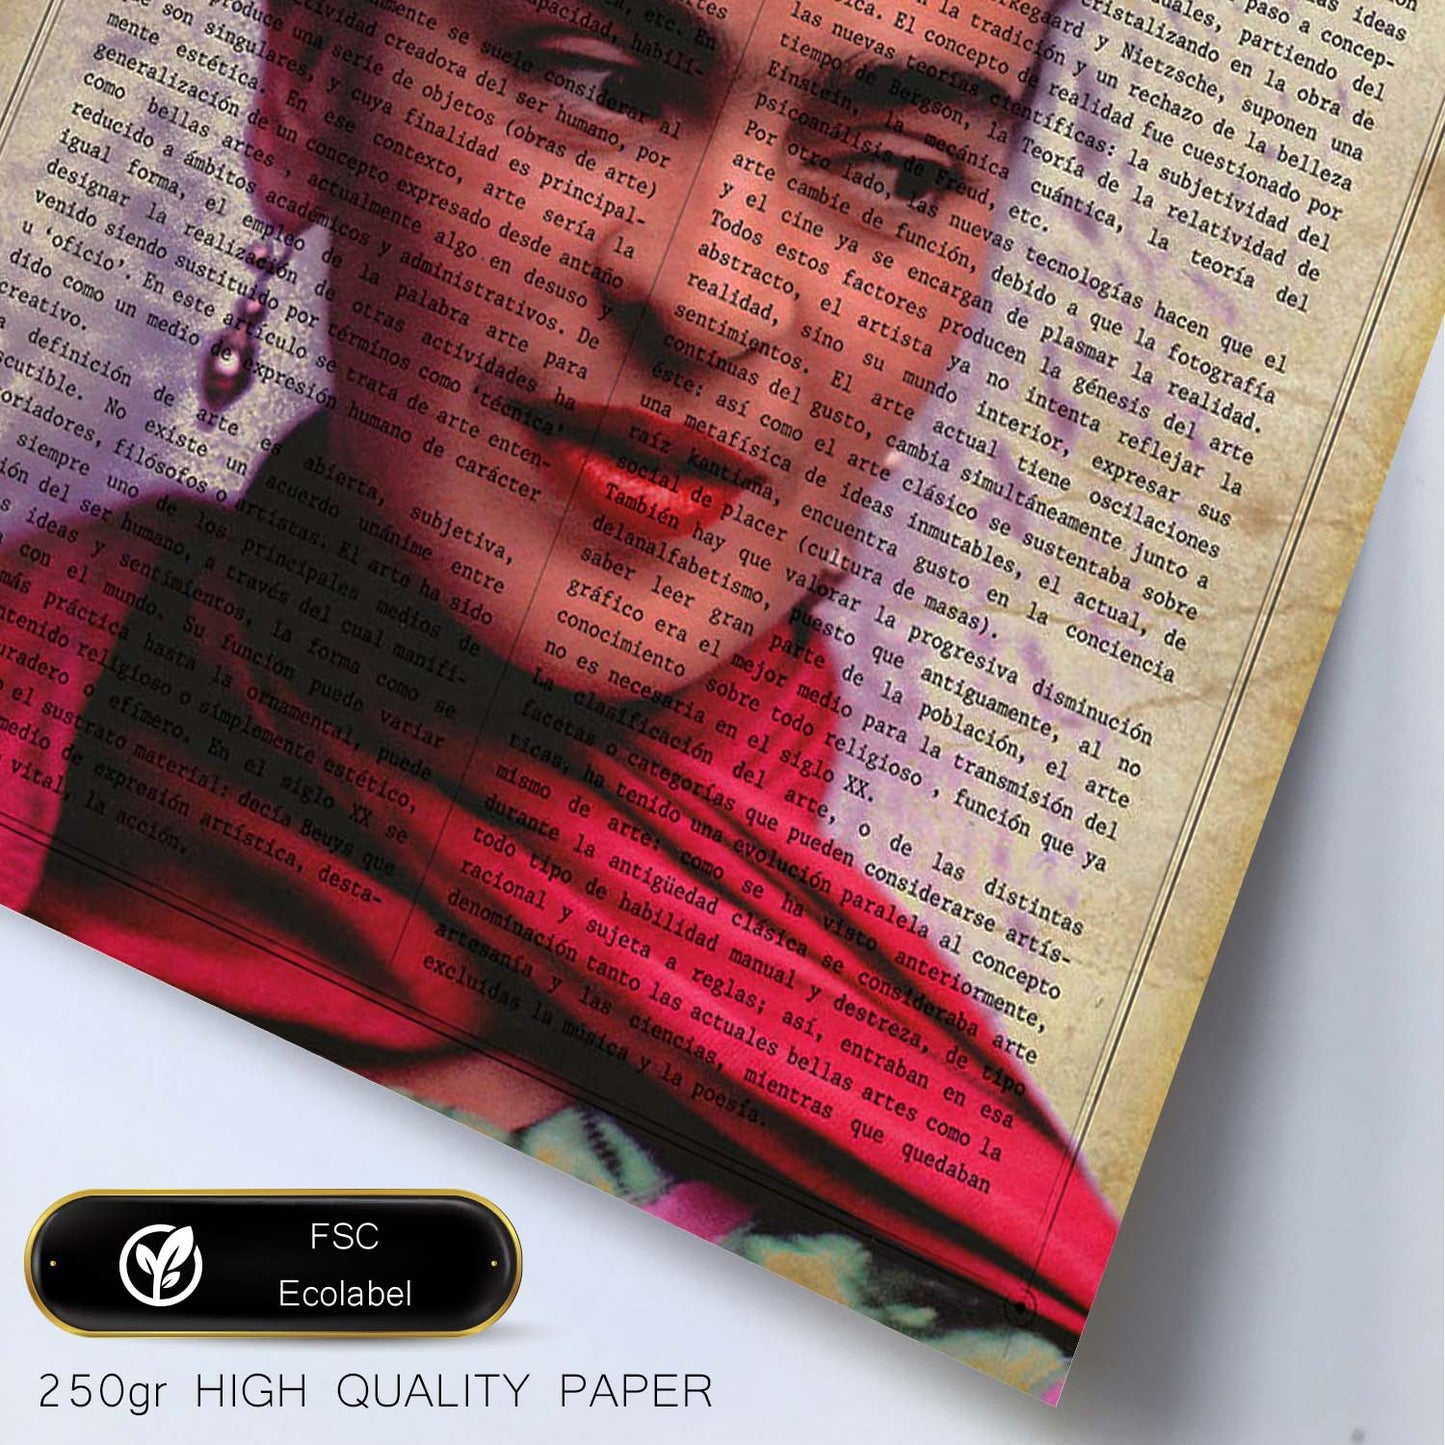 Poster de Frida Kahlo. Láminas de personajes importantes. Posters de músicos, actores, inventores, exploradores, ...-Artwork-Nacnic-Nacnic Estudio SL